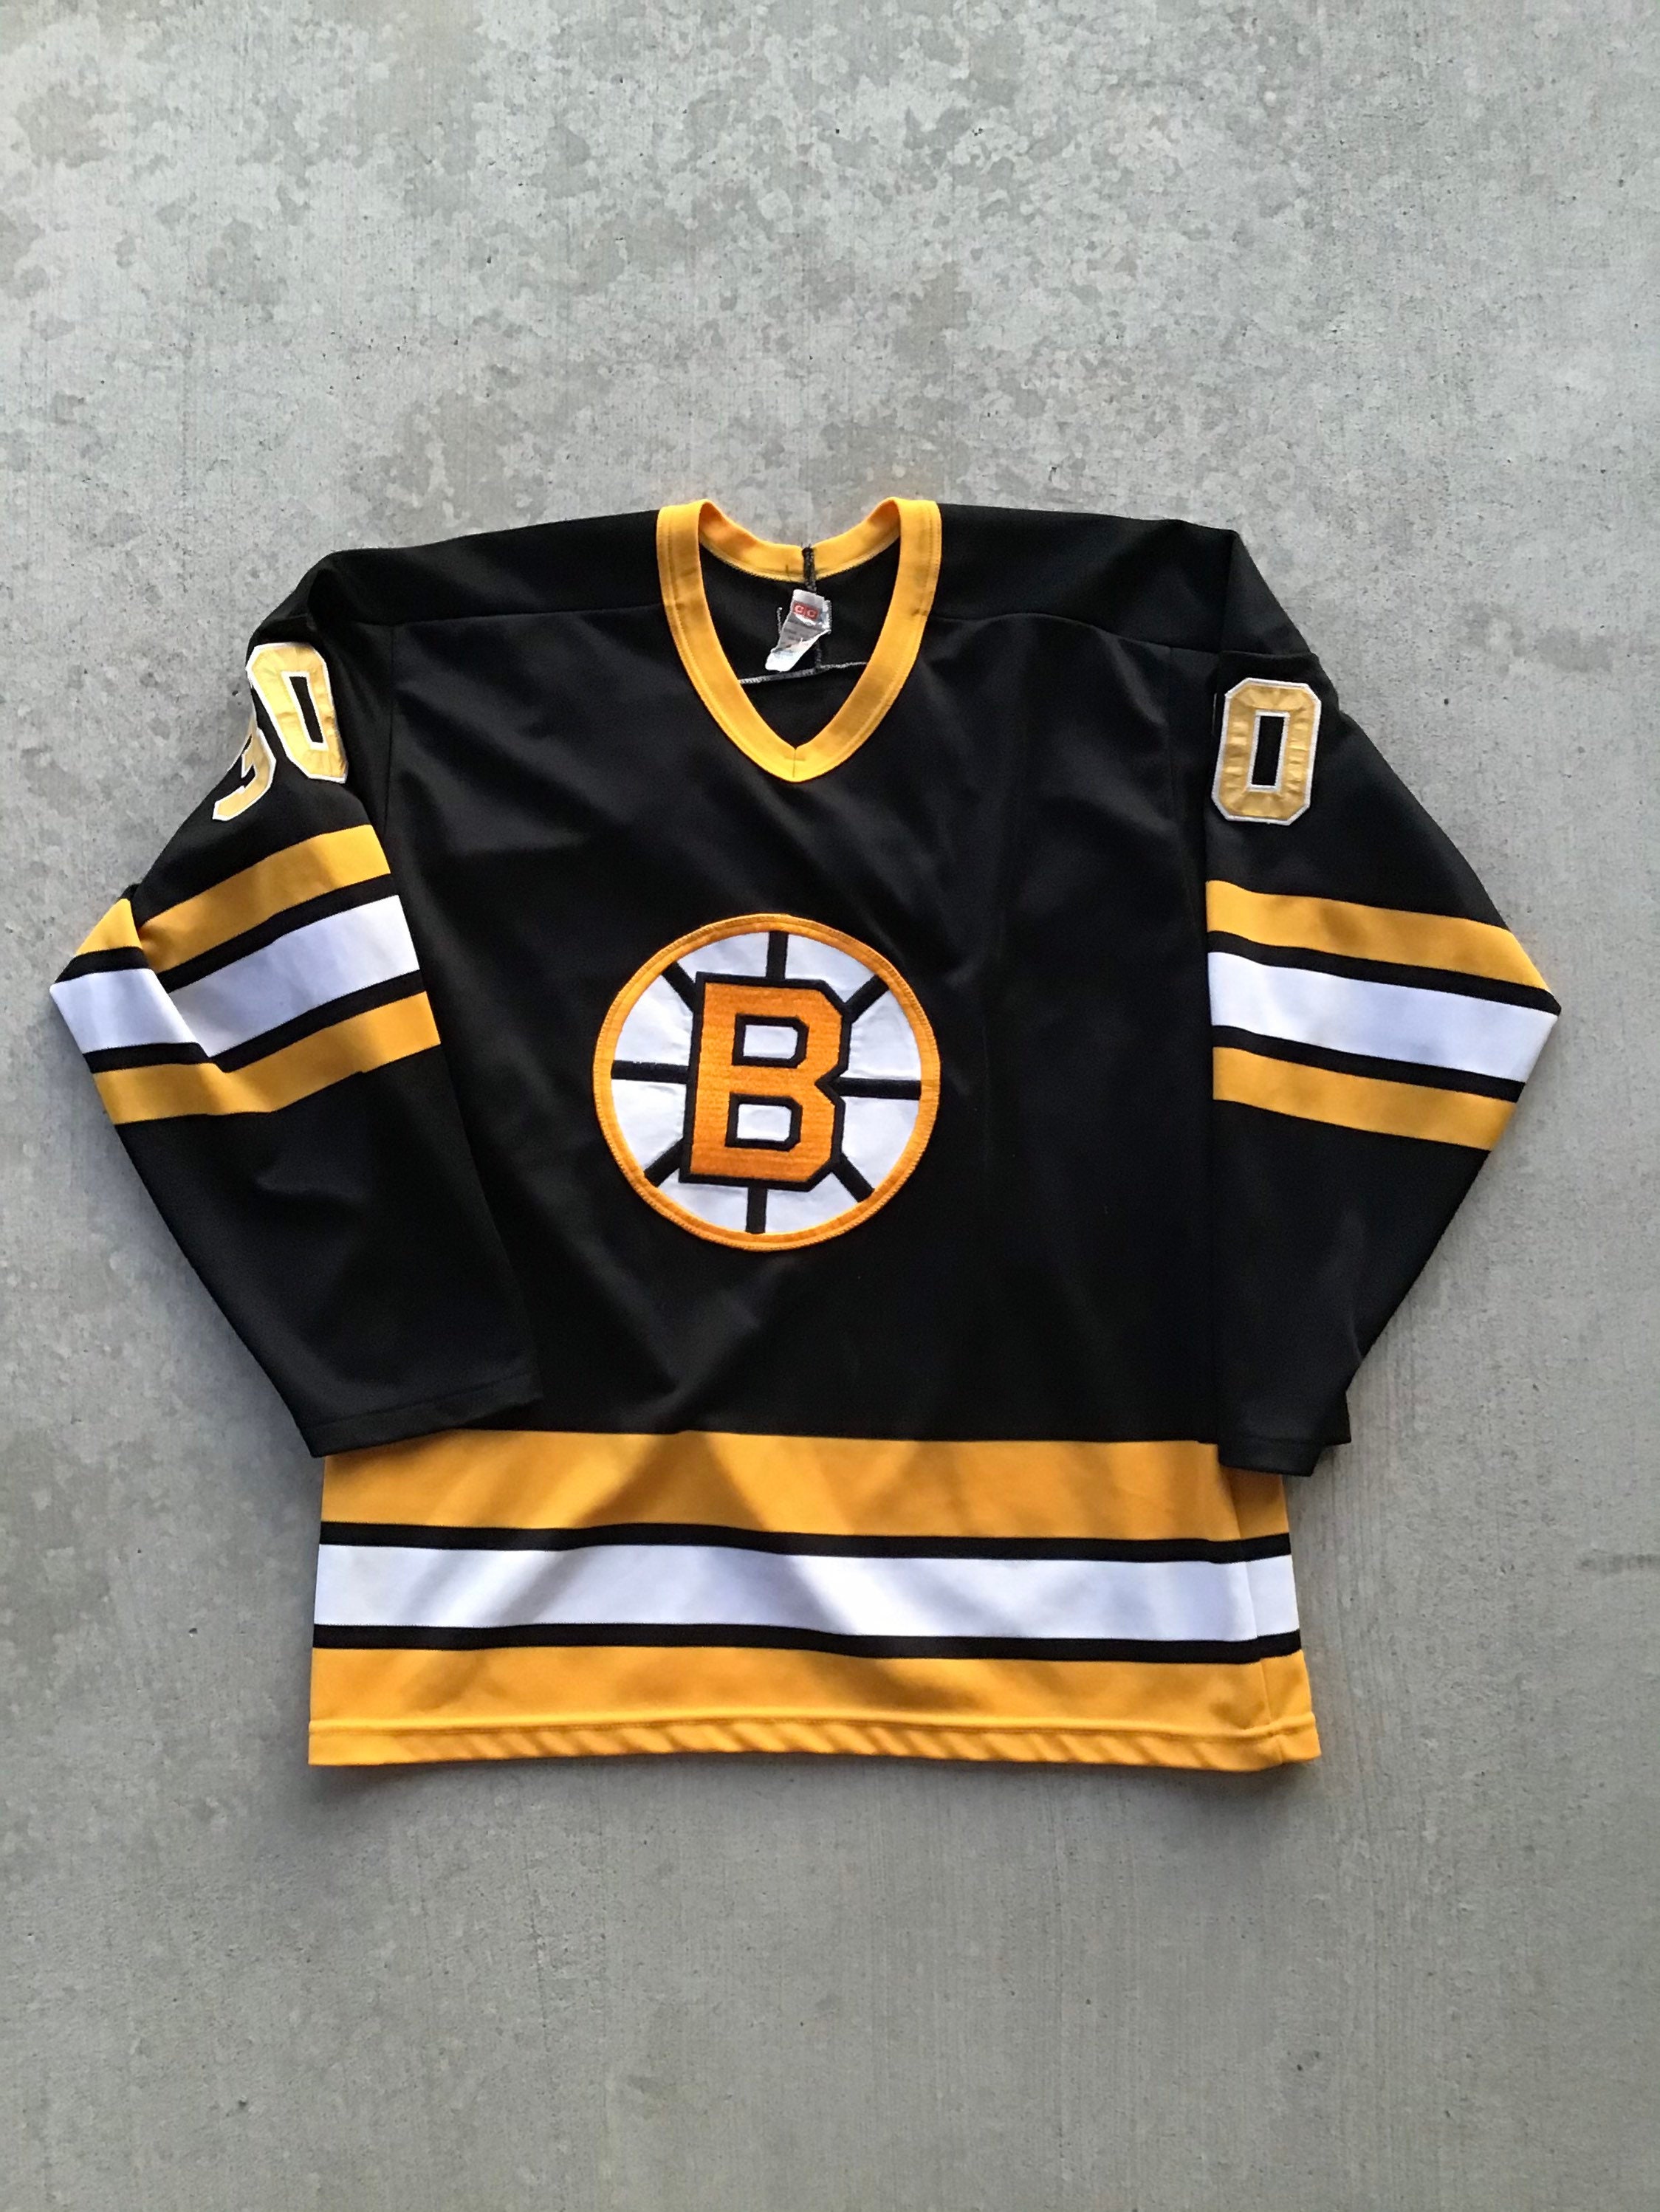 Youth Black/Gold Boston Bruins Two-Man Advantage T-Shirt Combo Set